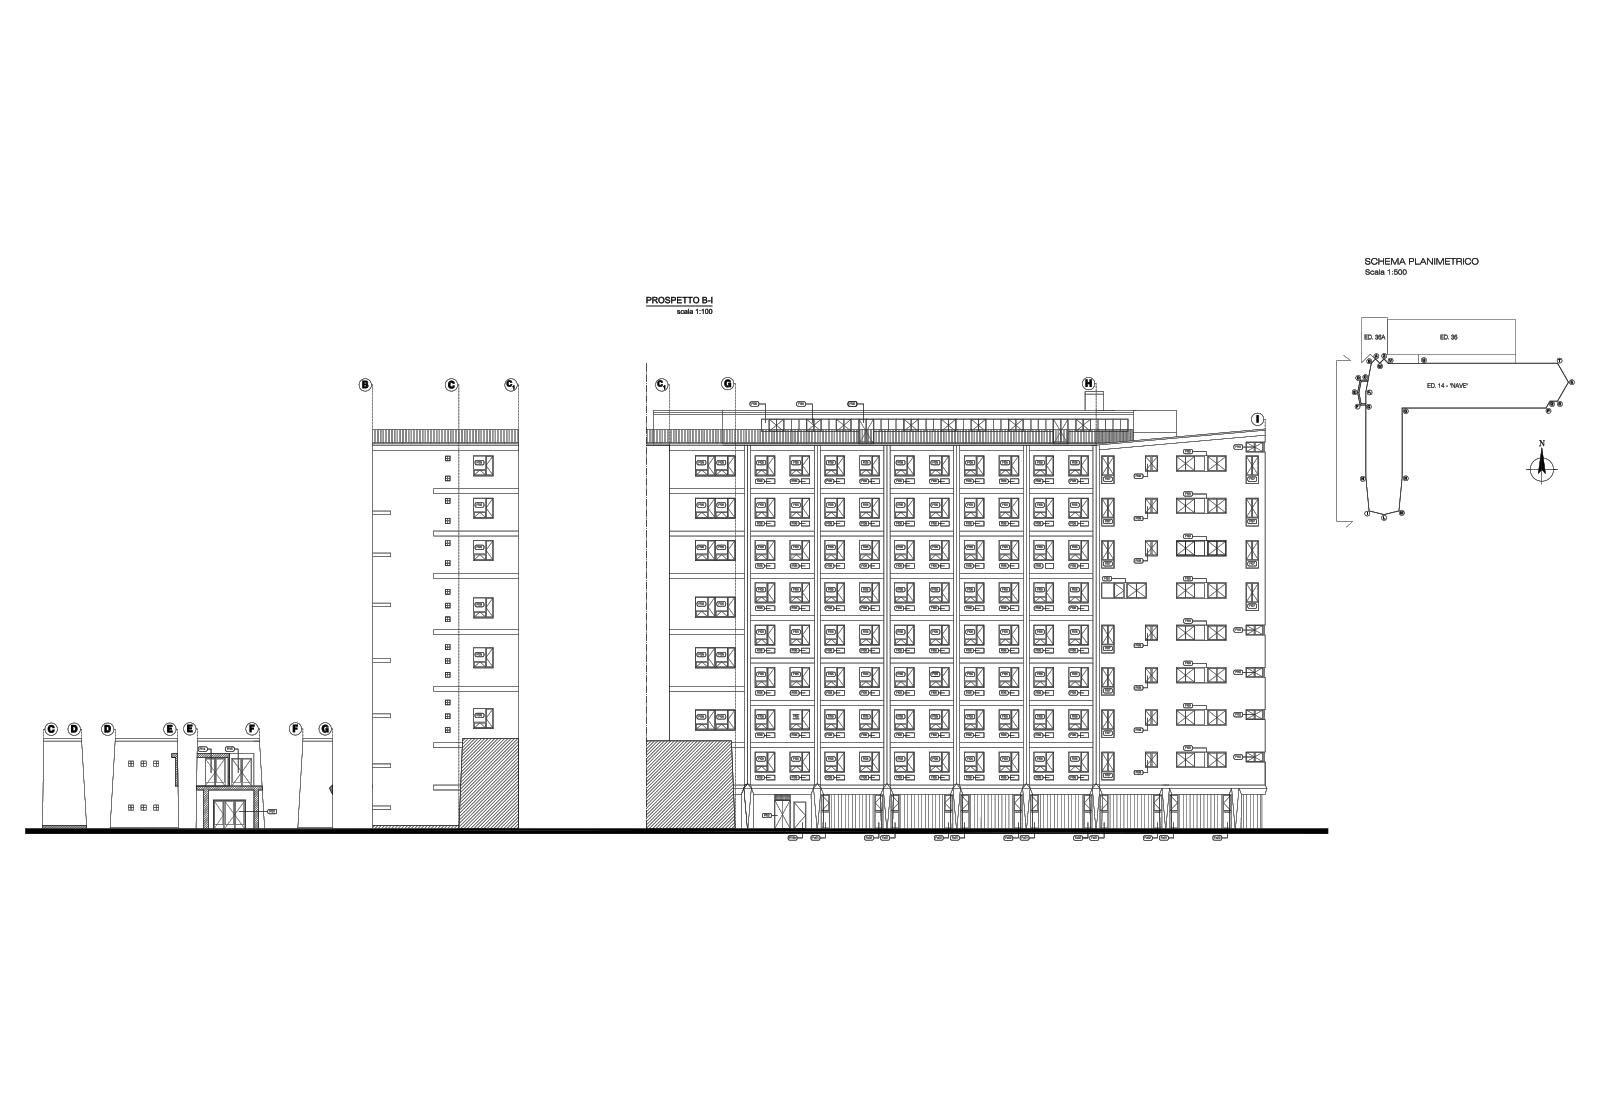 Building 14 Politecnico di Milano - Window replacement - Elevation 1